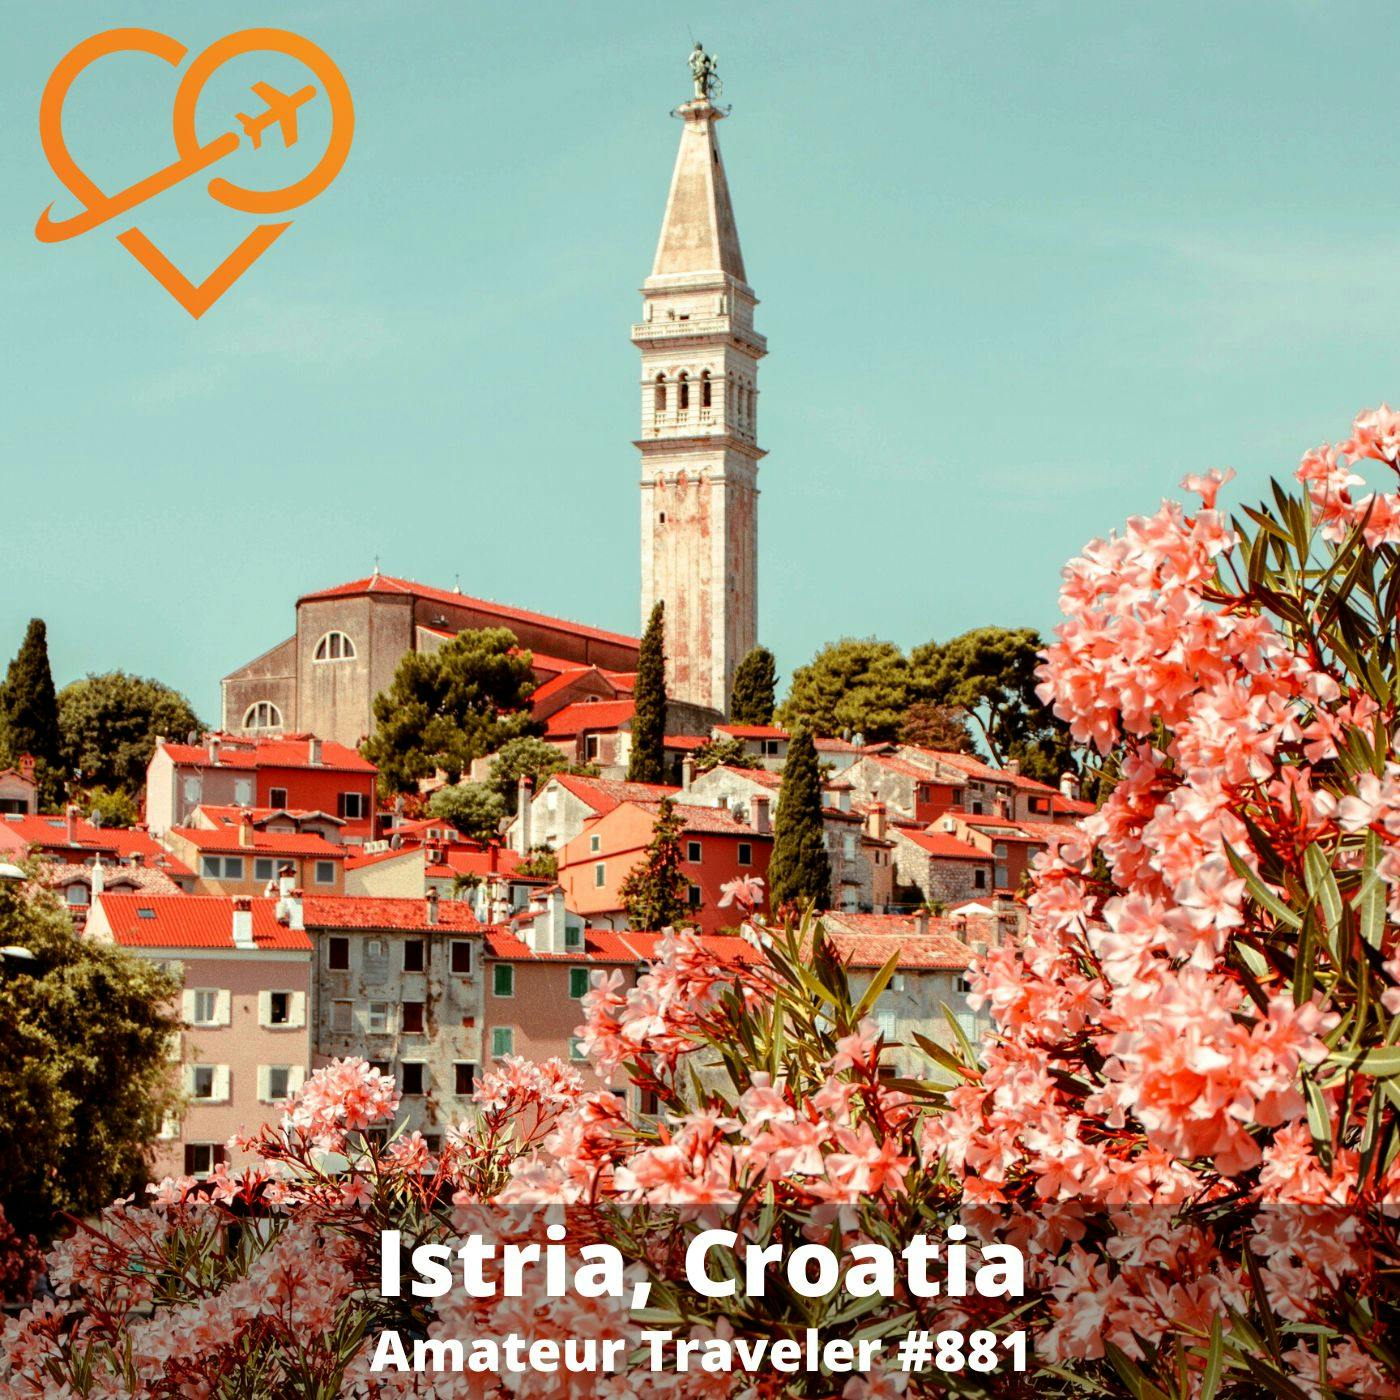 AT#881 - Travel to Croatia's Istrian Peninsula